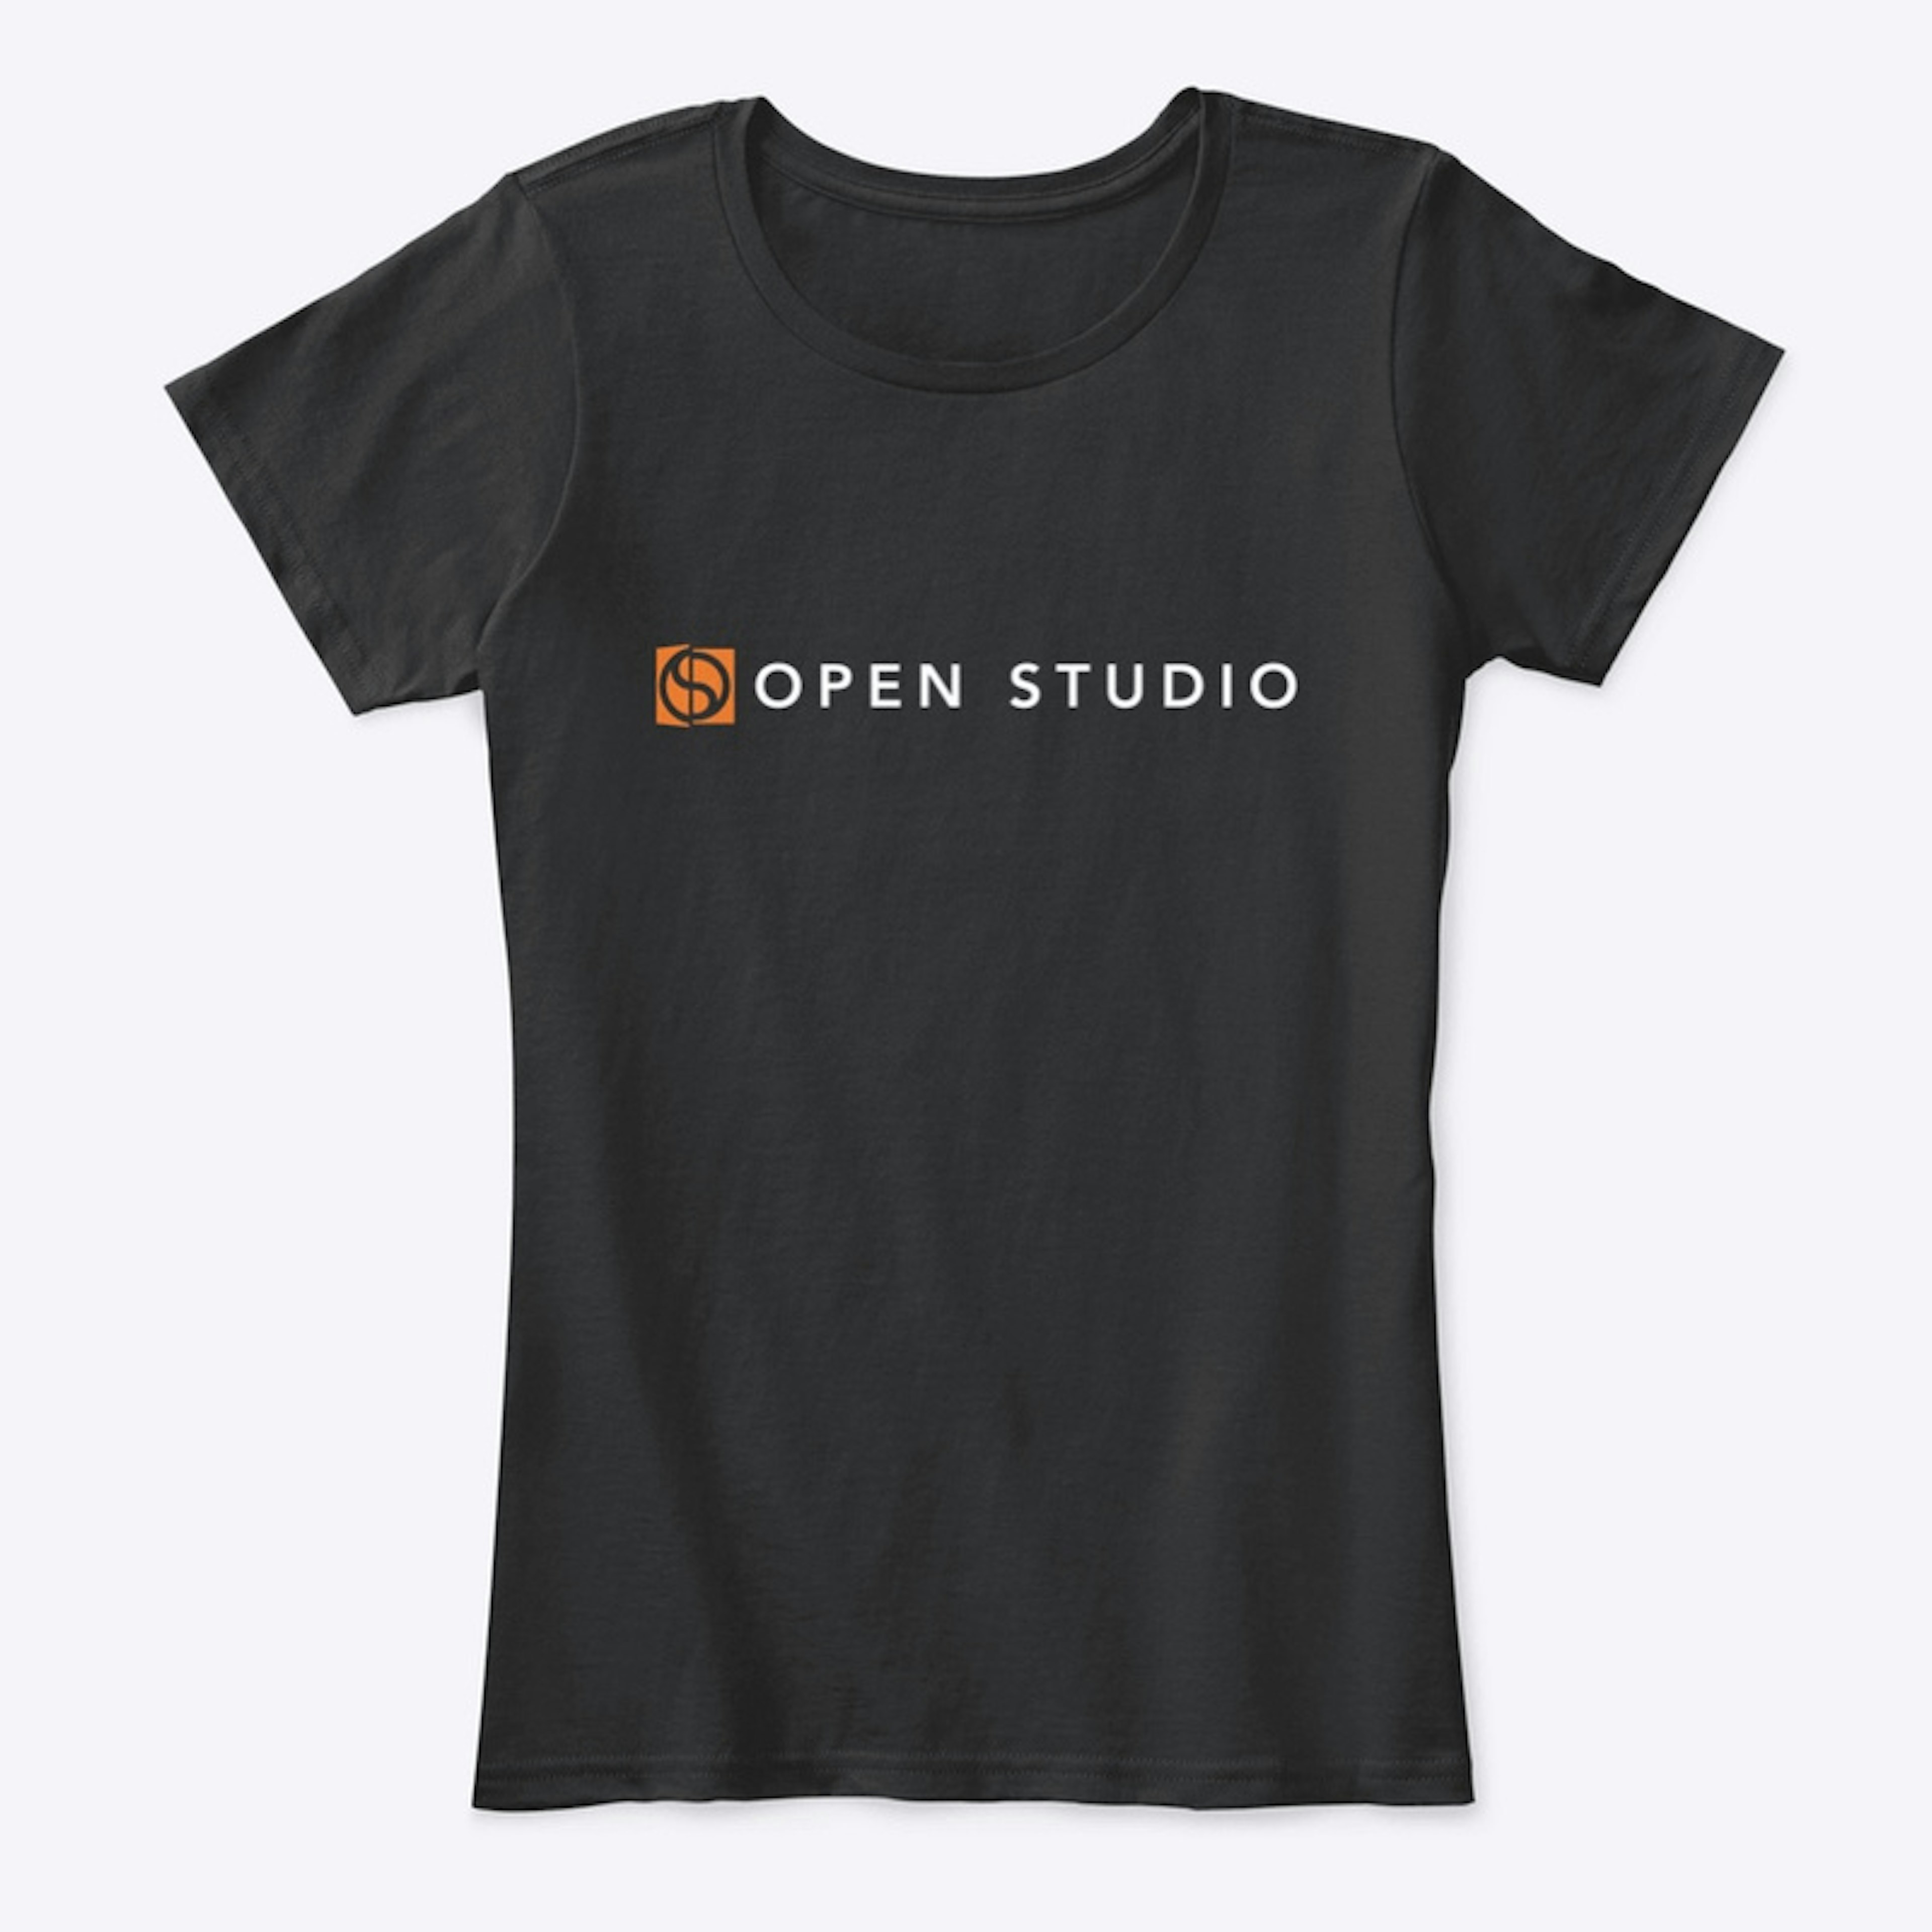 The "Original" Open Studio Shirt